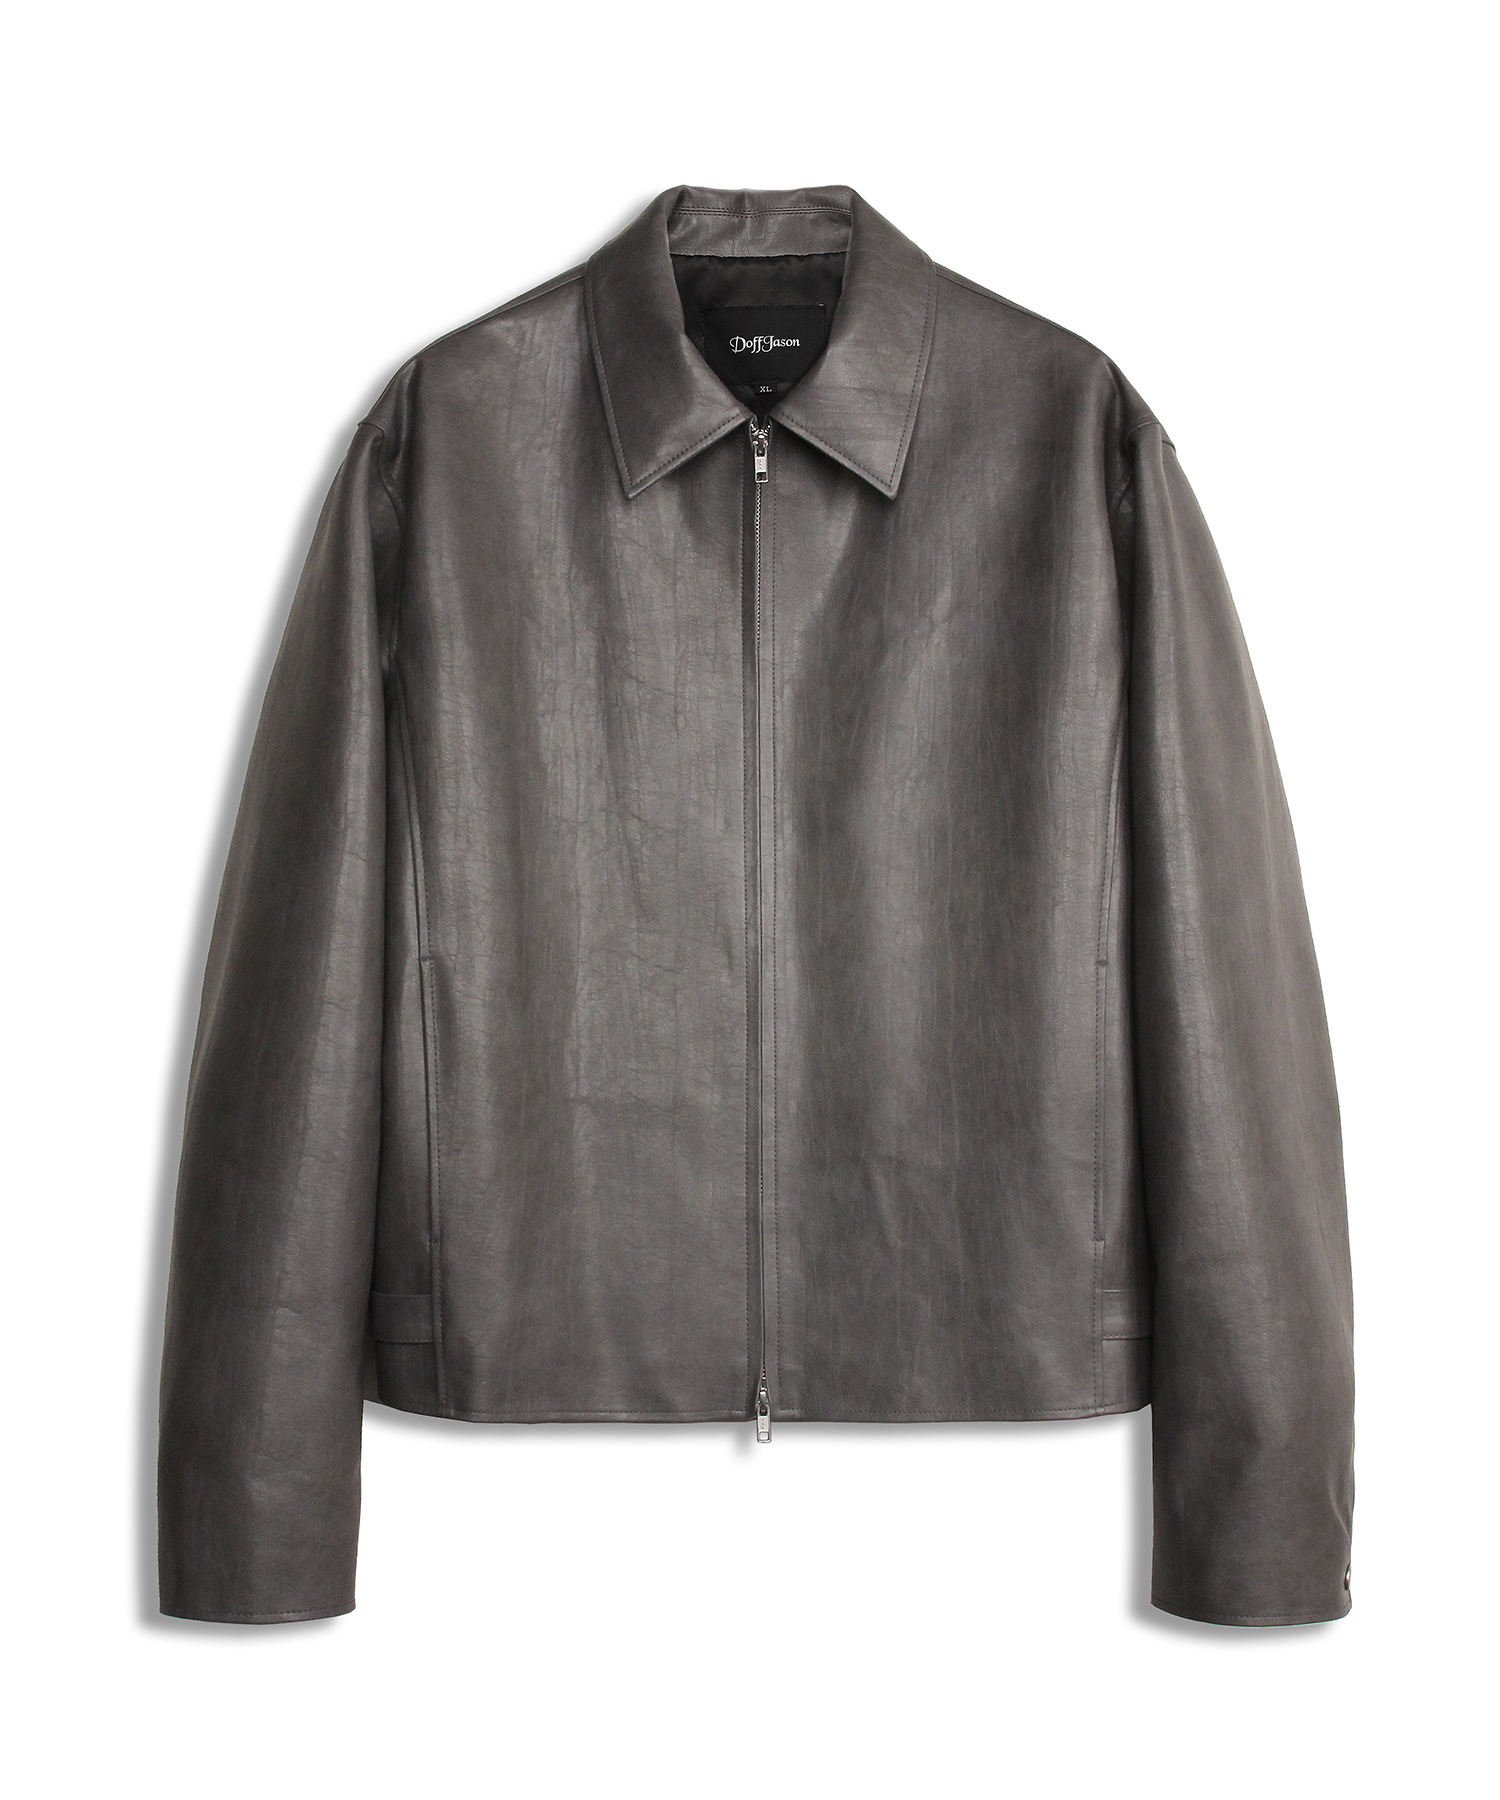 Overfit vegan leather crop single jacket GREY